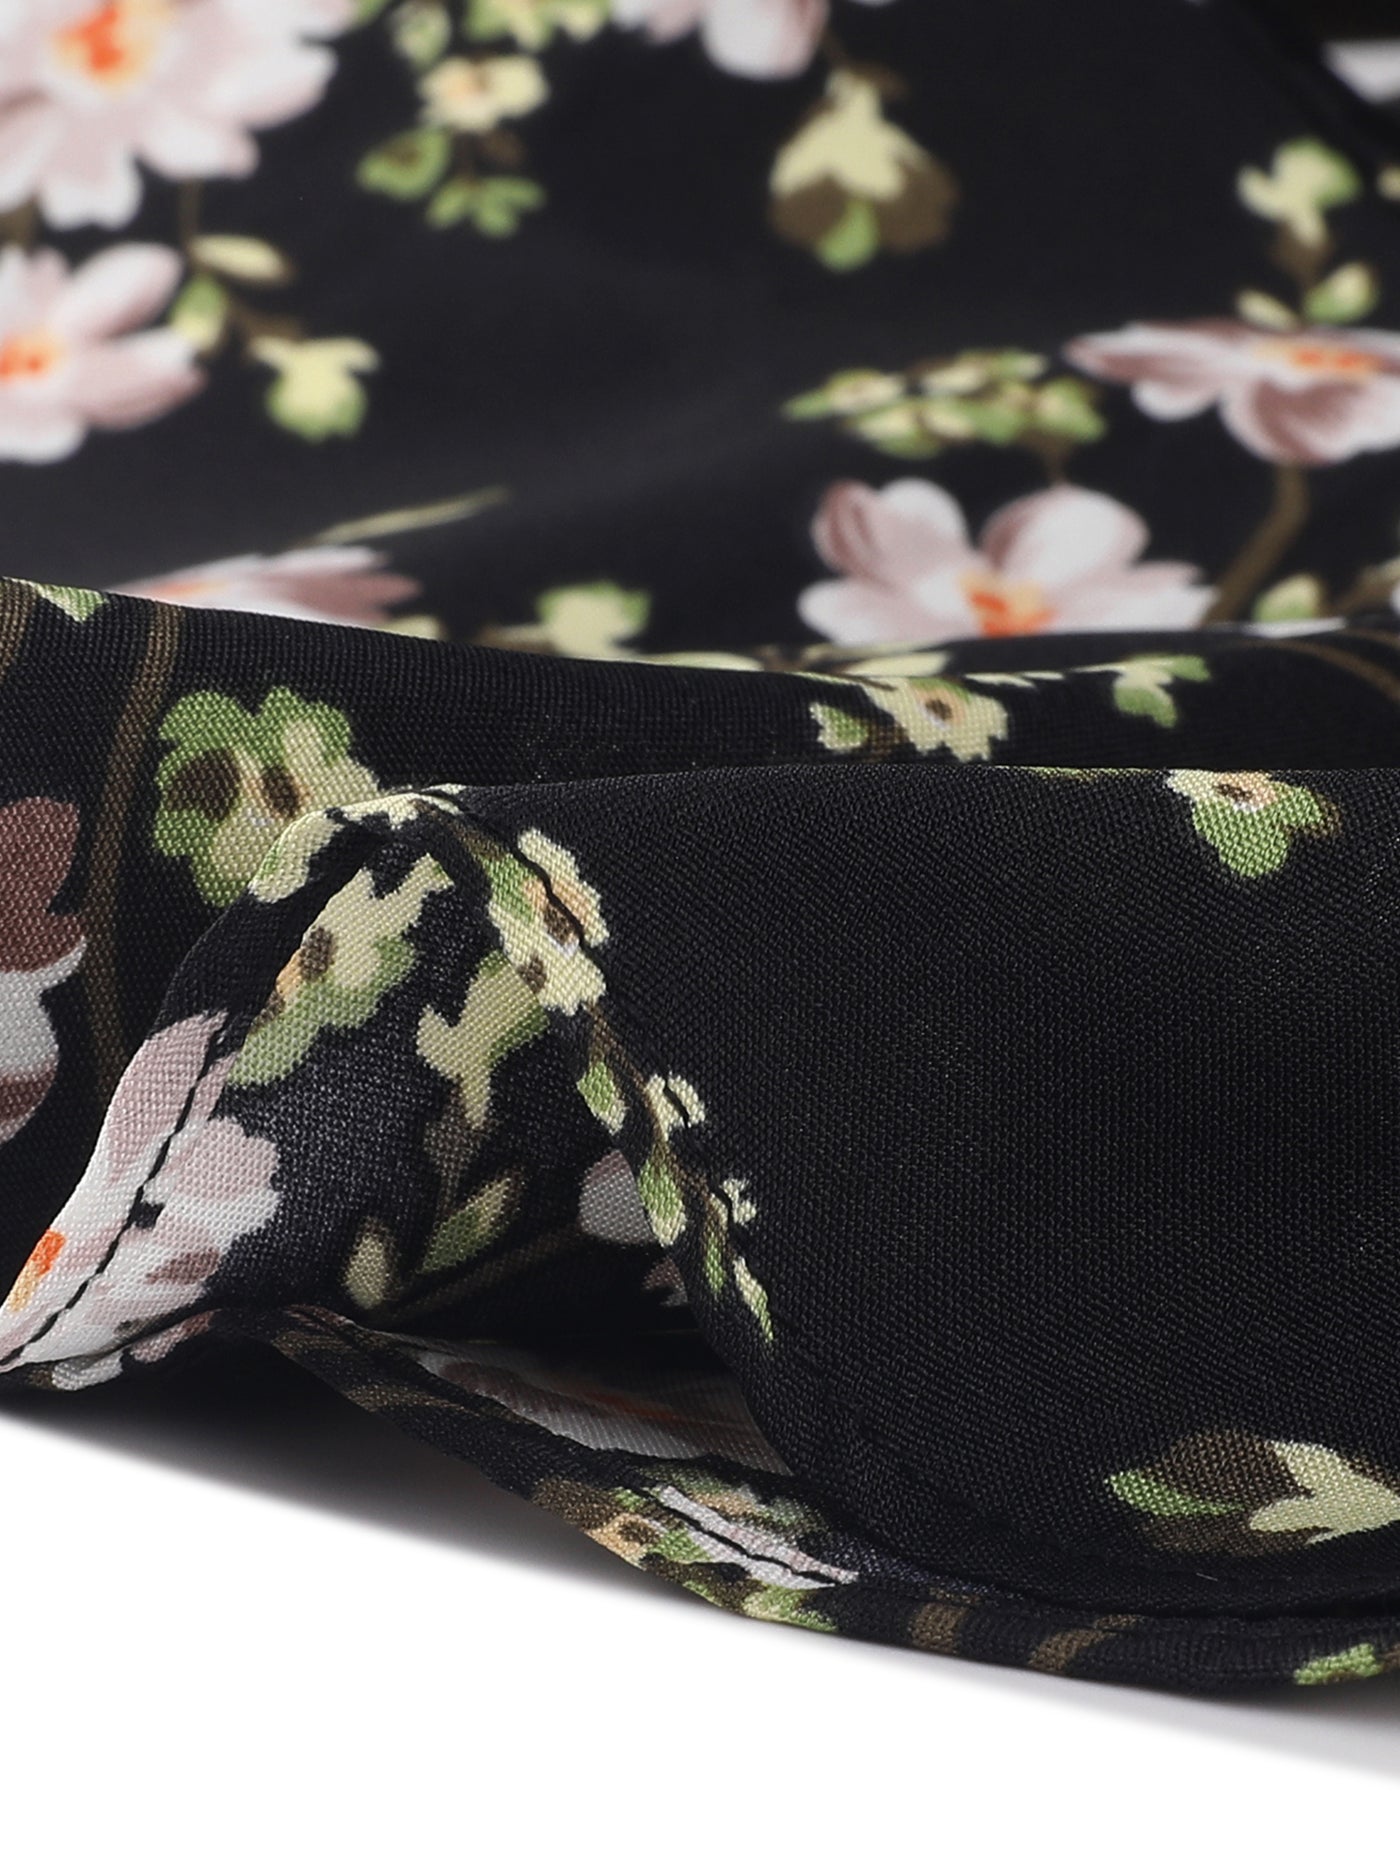 Allegra K Floral Printed Self Tie Knot High-Low Ruffle Hem Wrap Skirt